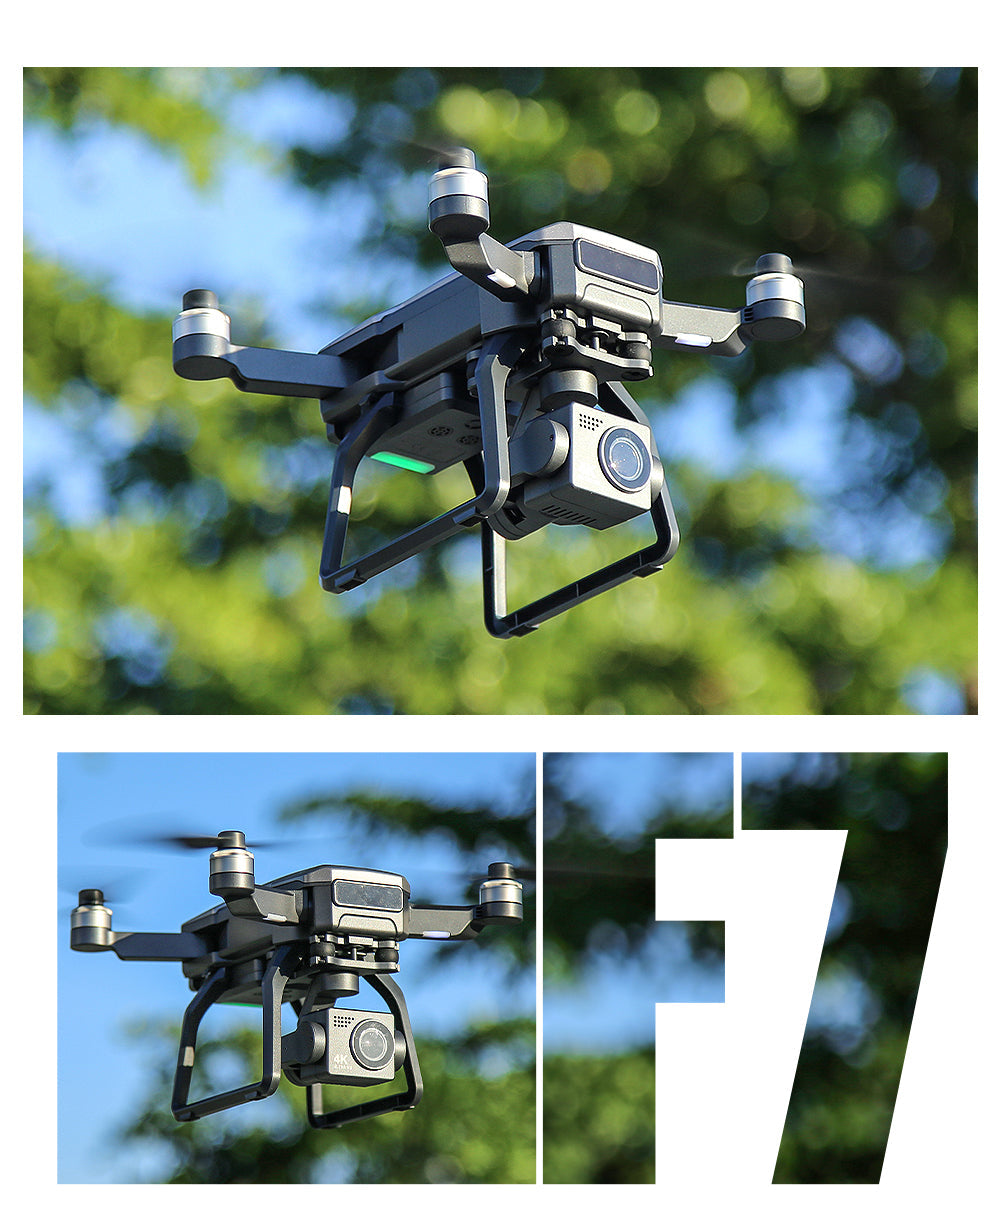 SJRC F7 PRO / F7S Pro Drone, F7S Pro has 360° radar obstacle avoidance based on F7 Pro .